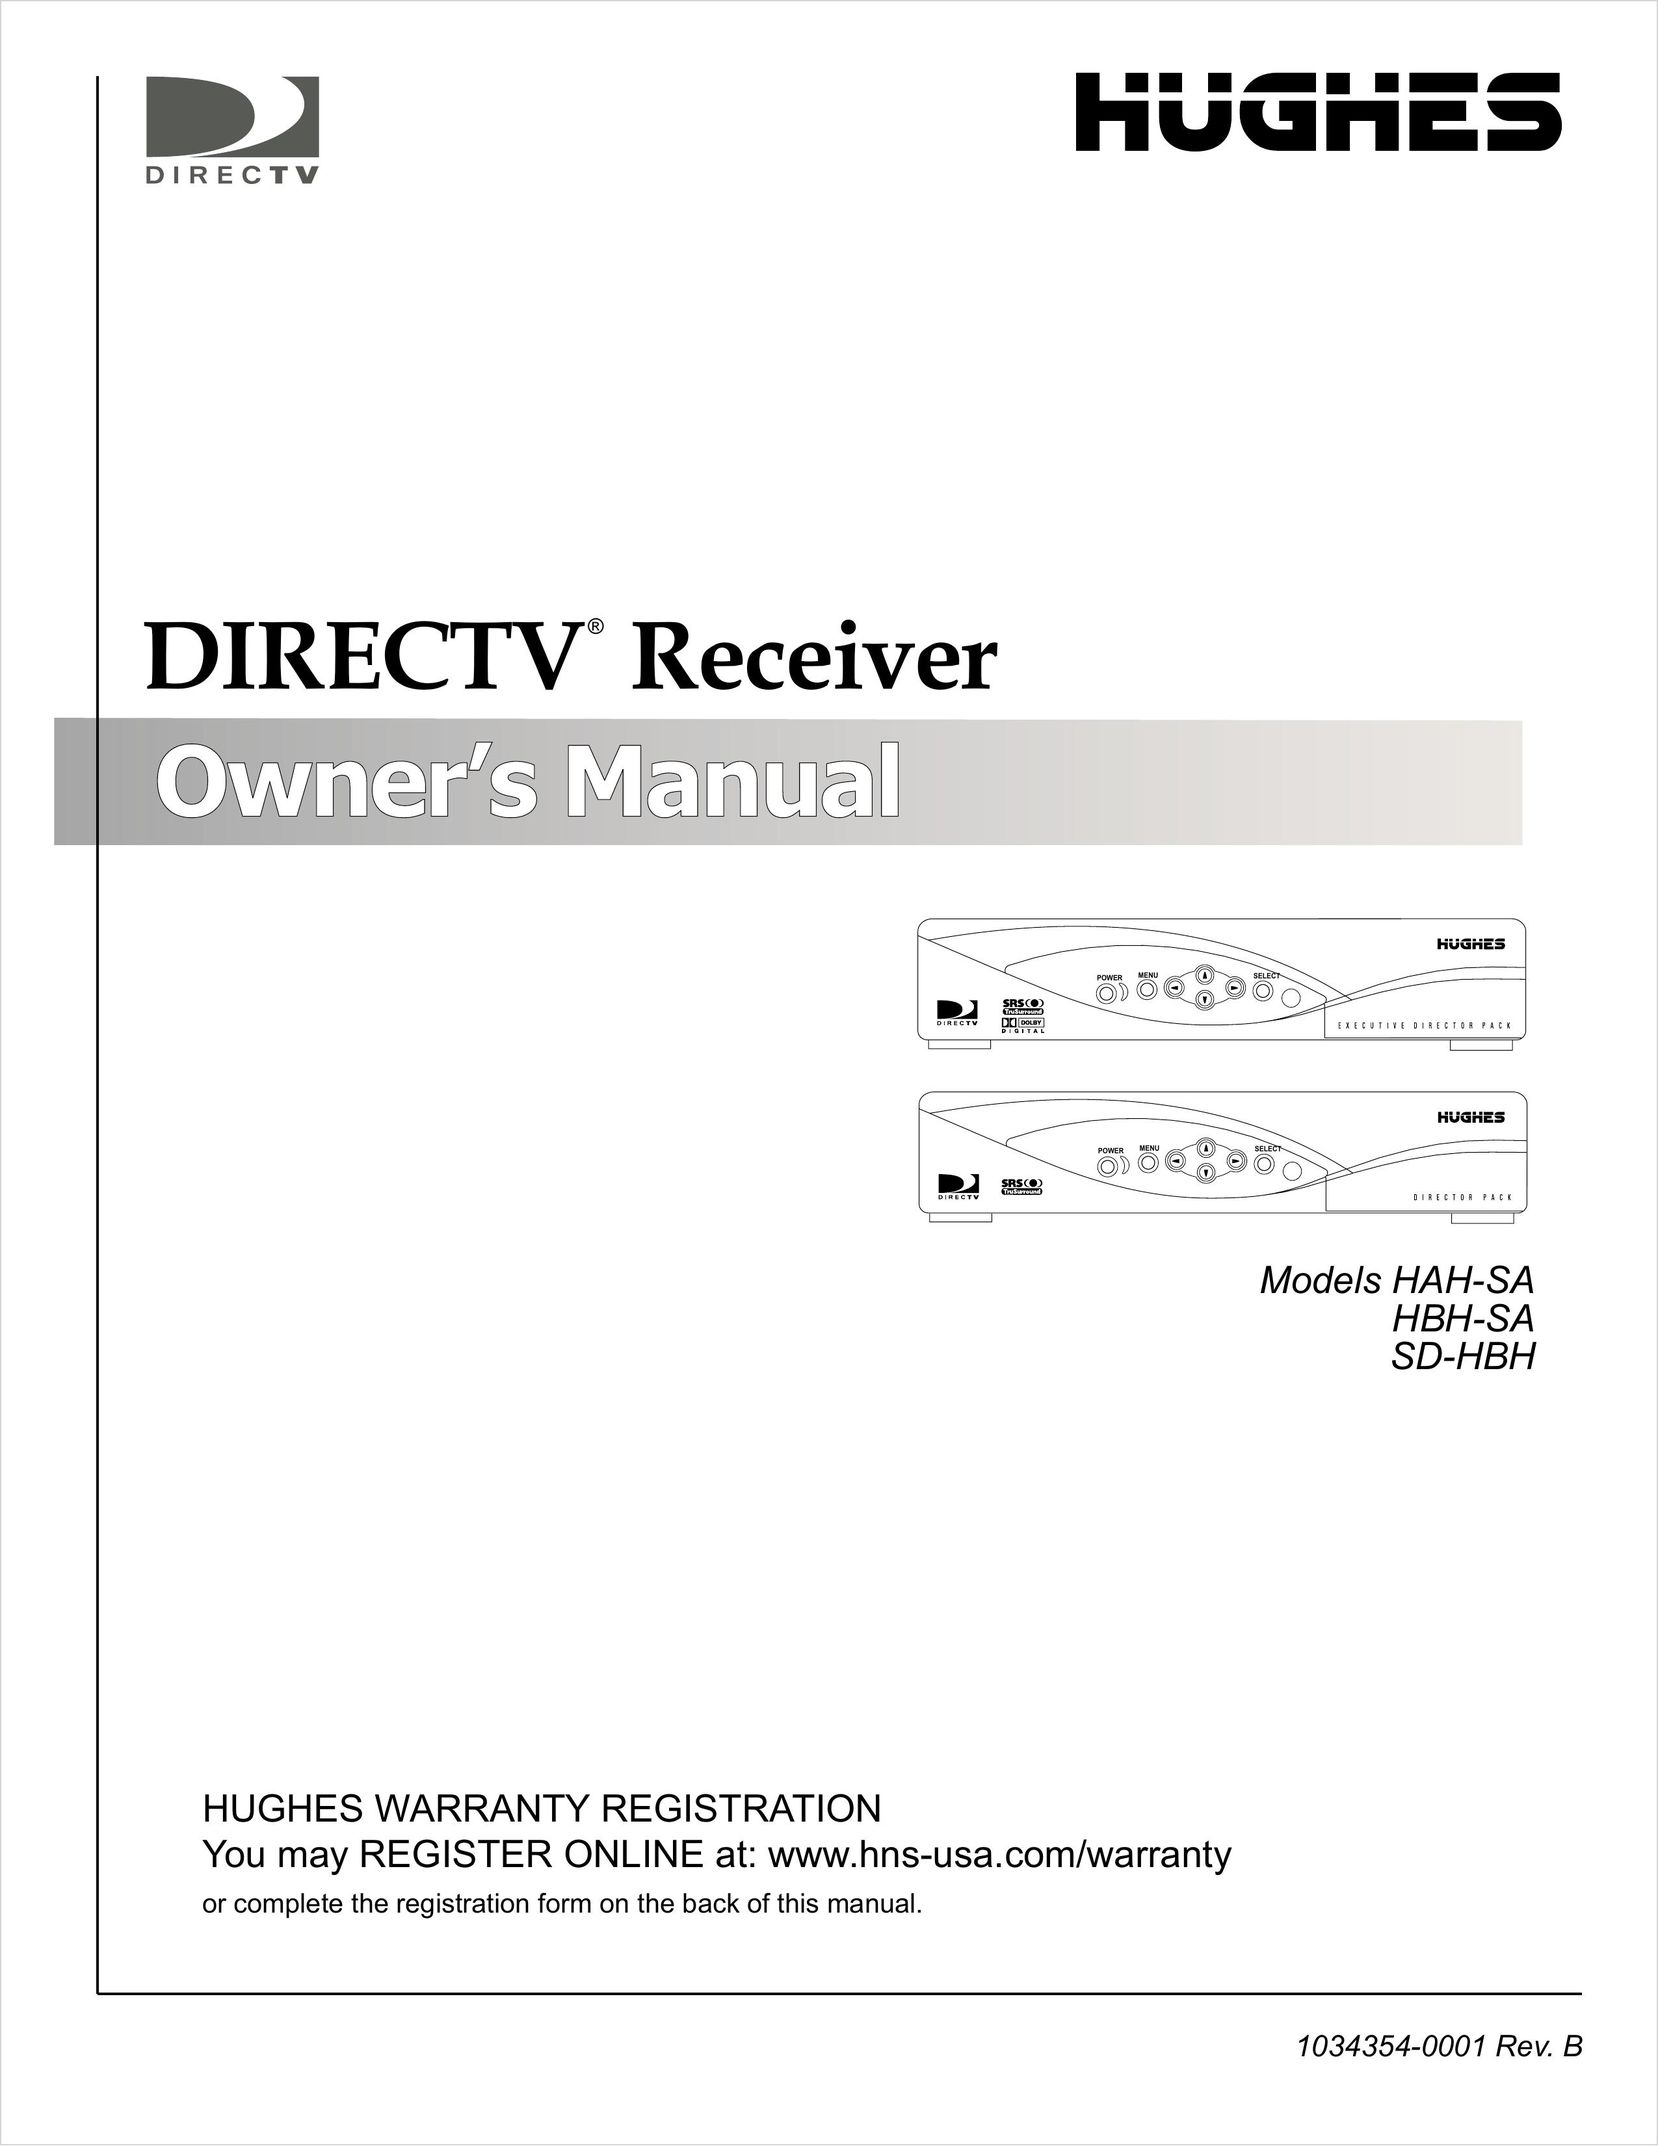 DirecTV SD-HBH Satellite TV System User Manual